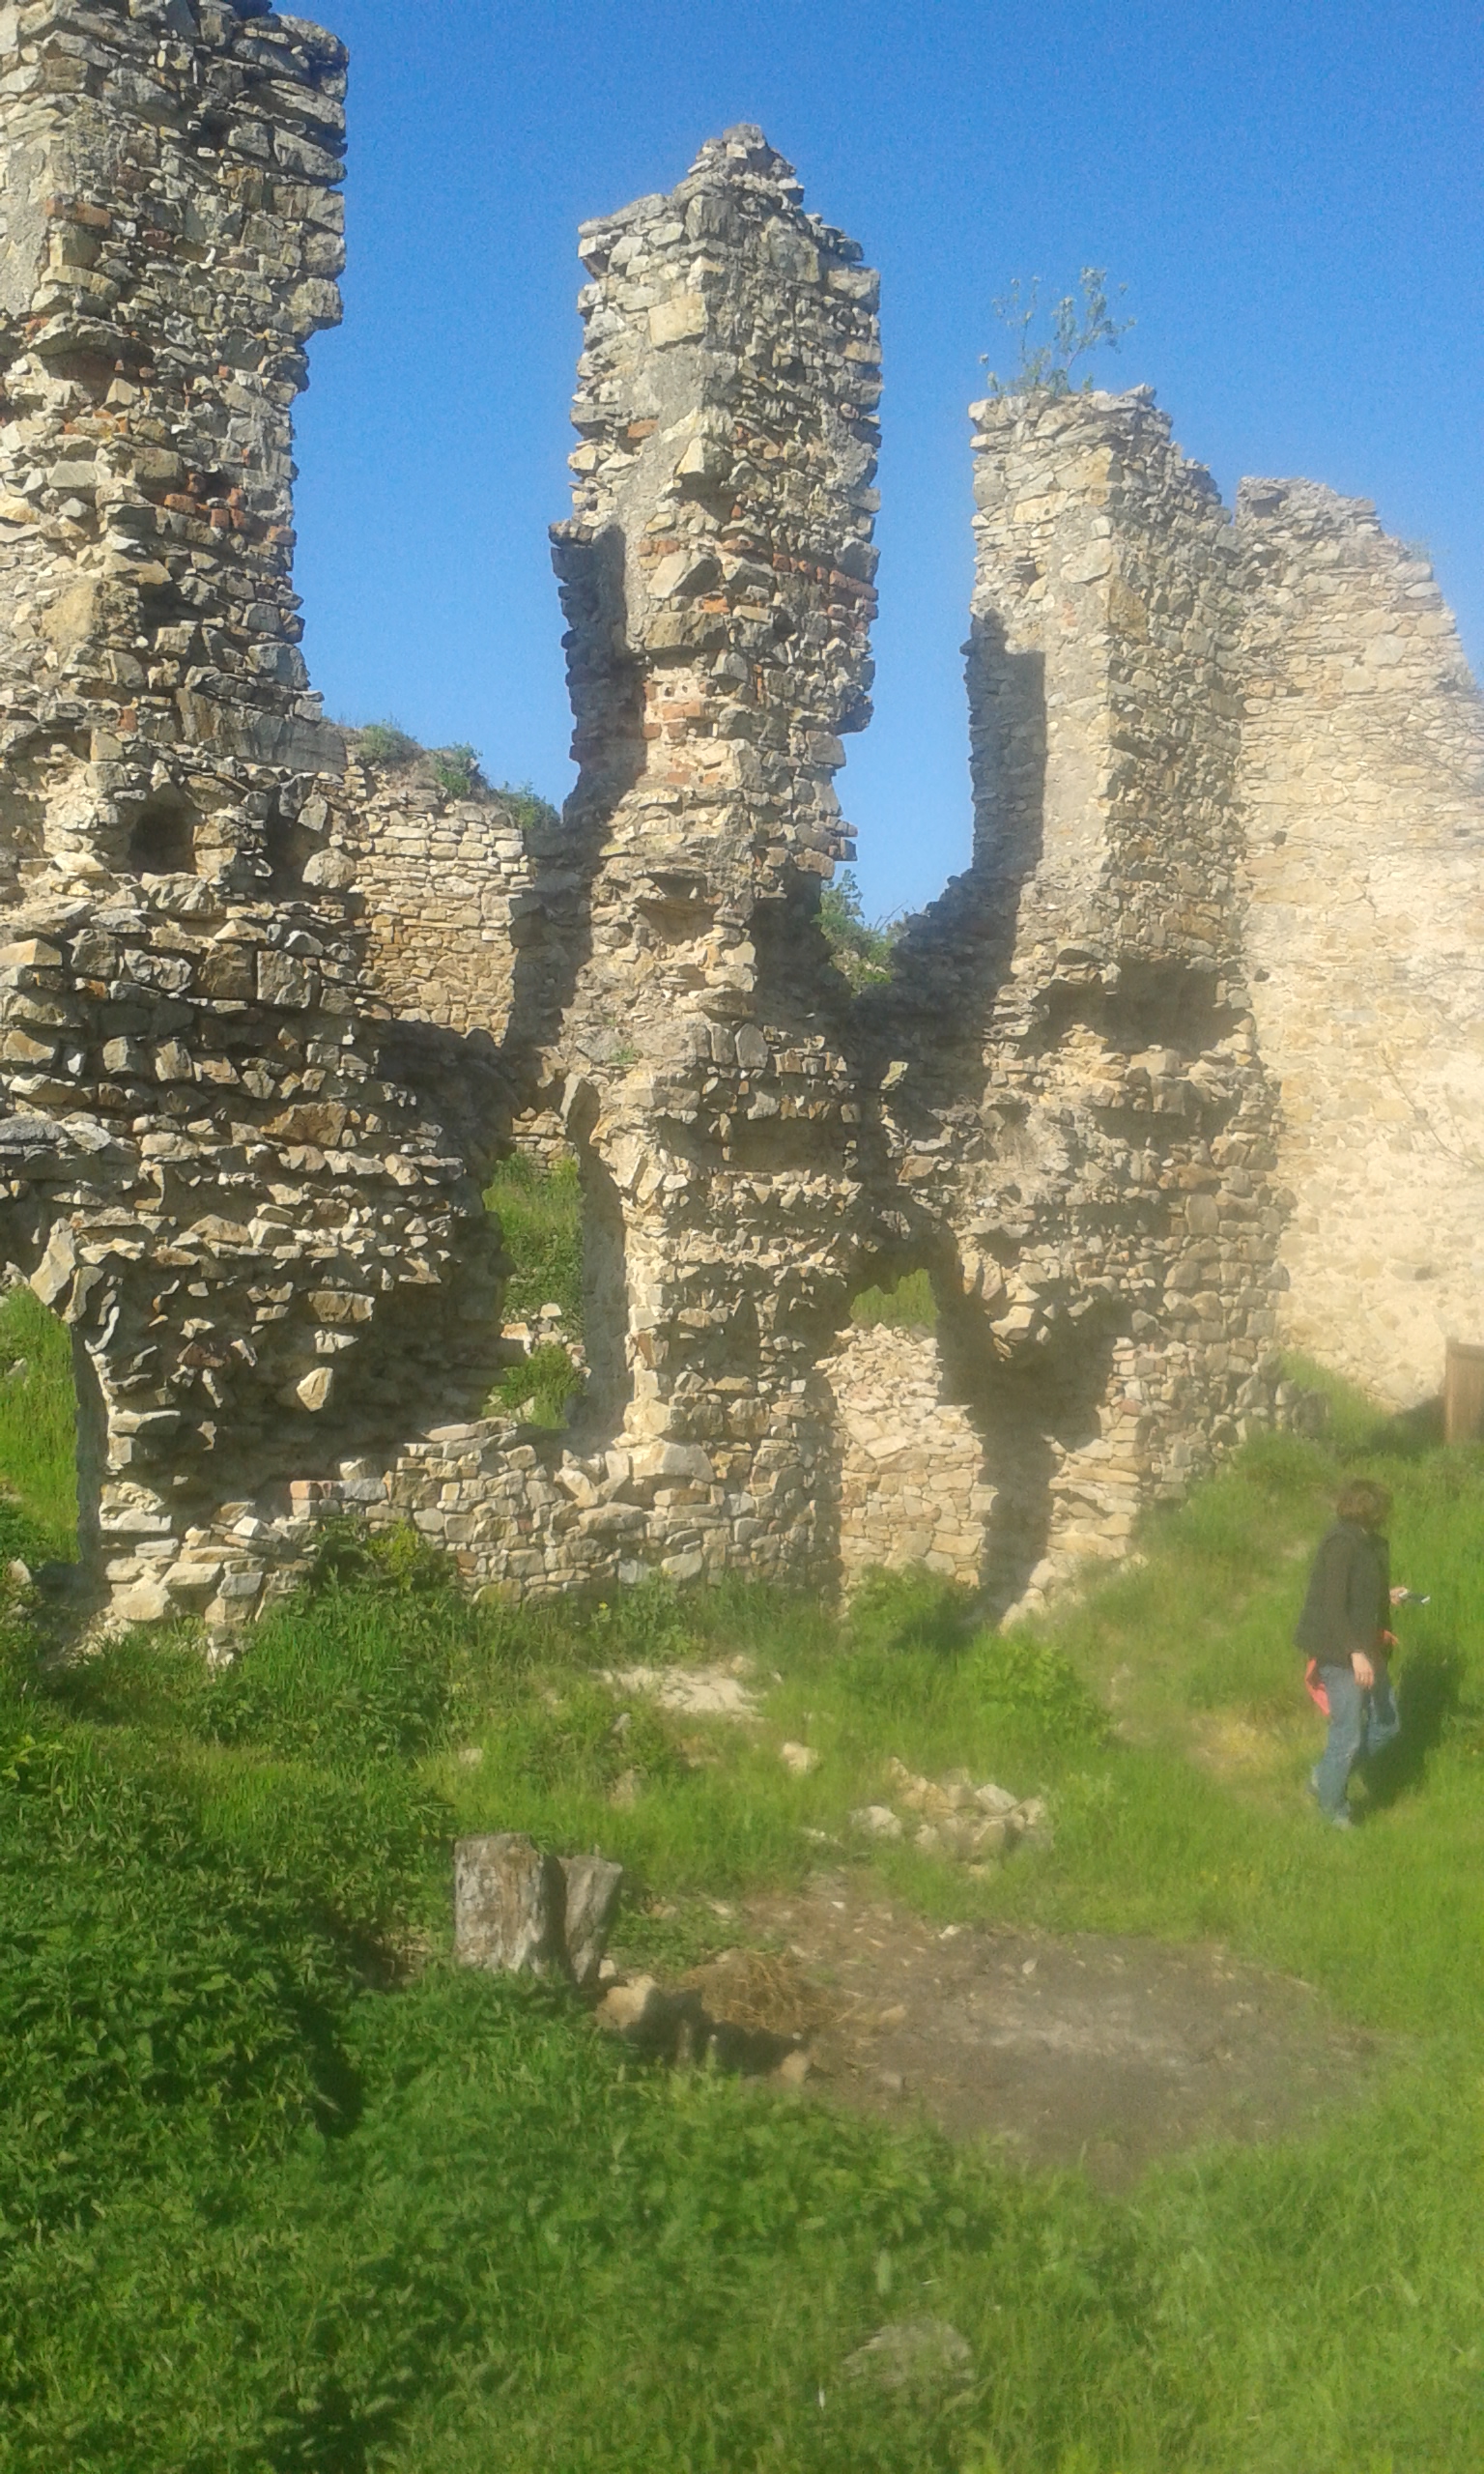 zřícenina hradu Templštýn